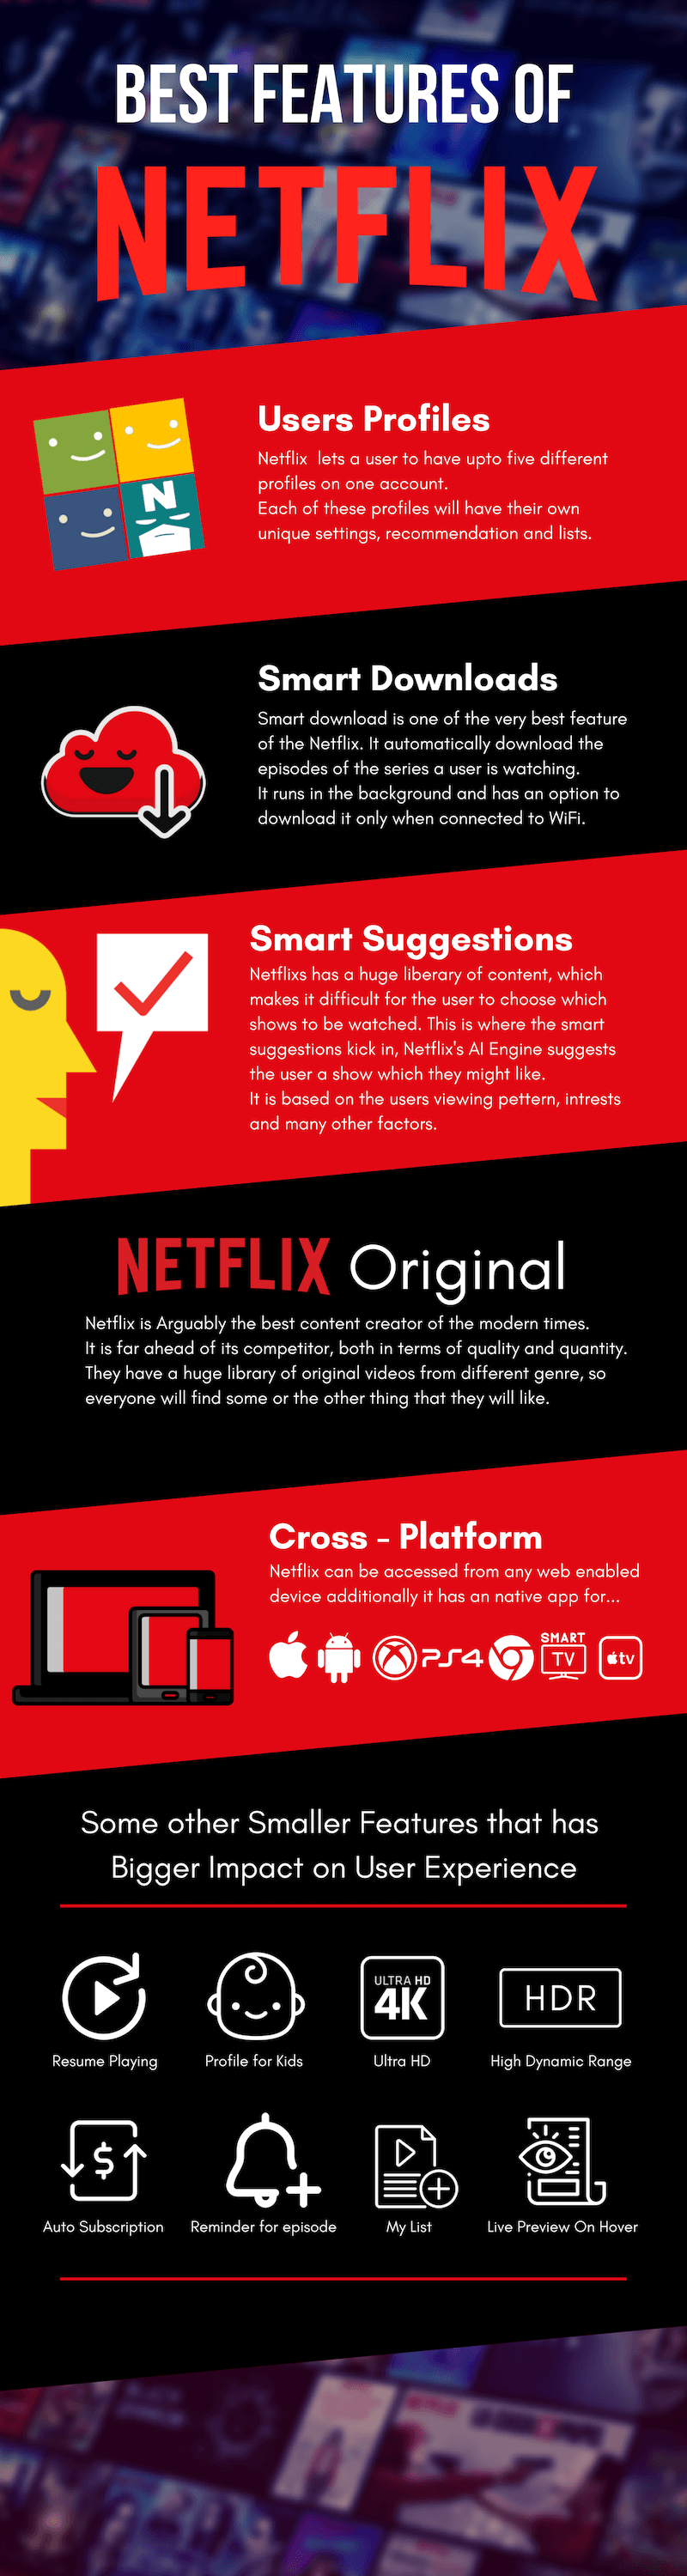 Best-Features-of-Netflix-no-branding-tiny.png